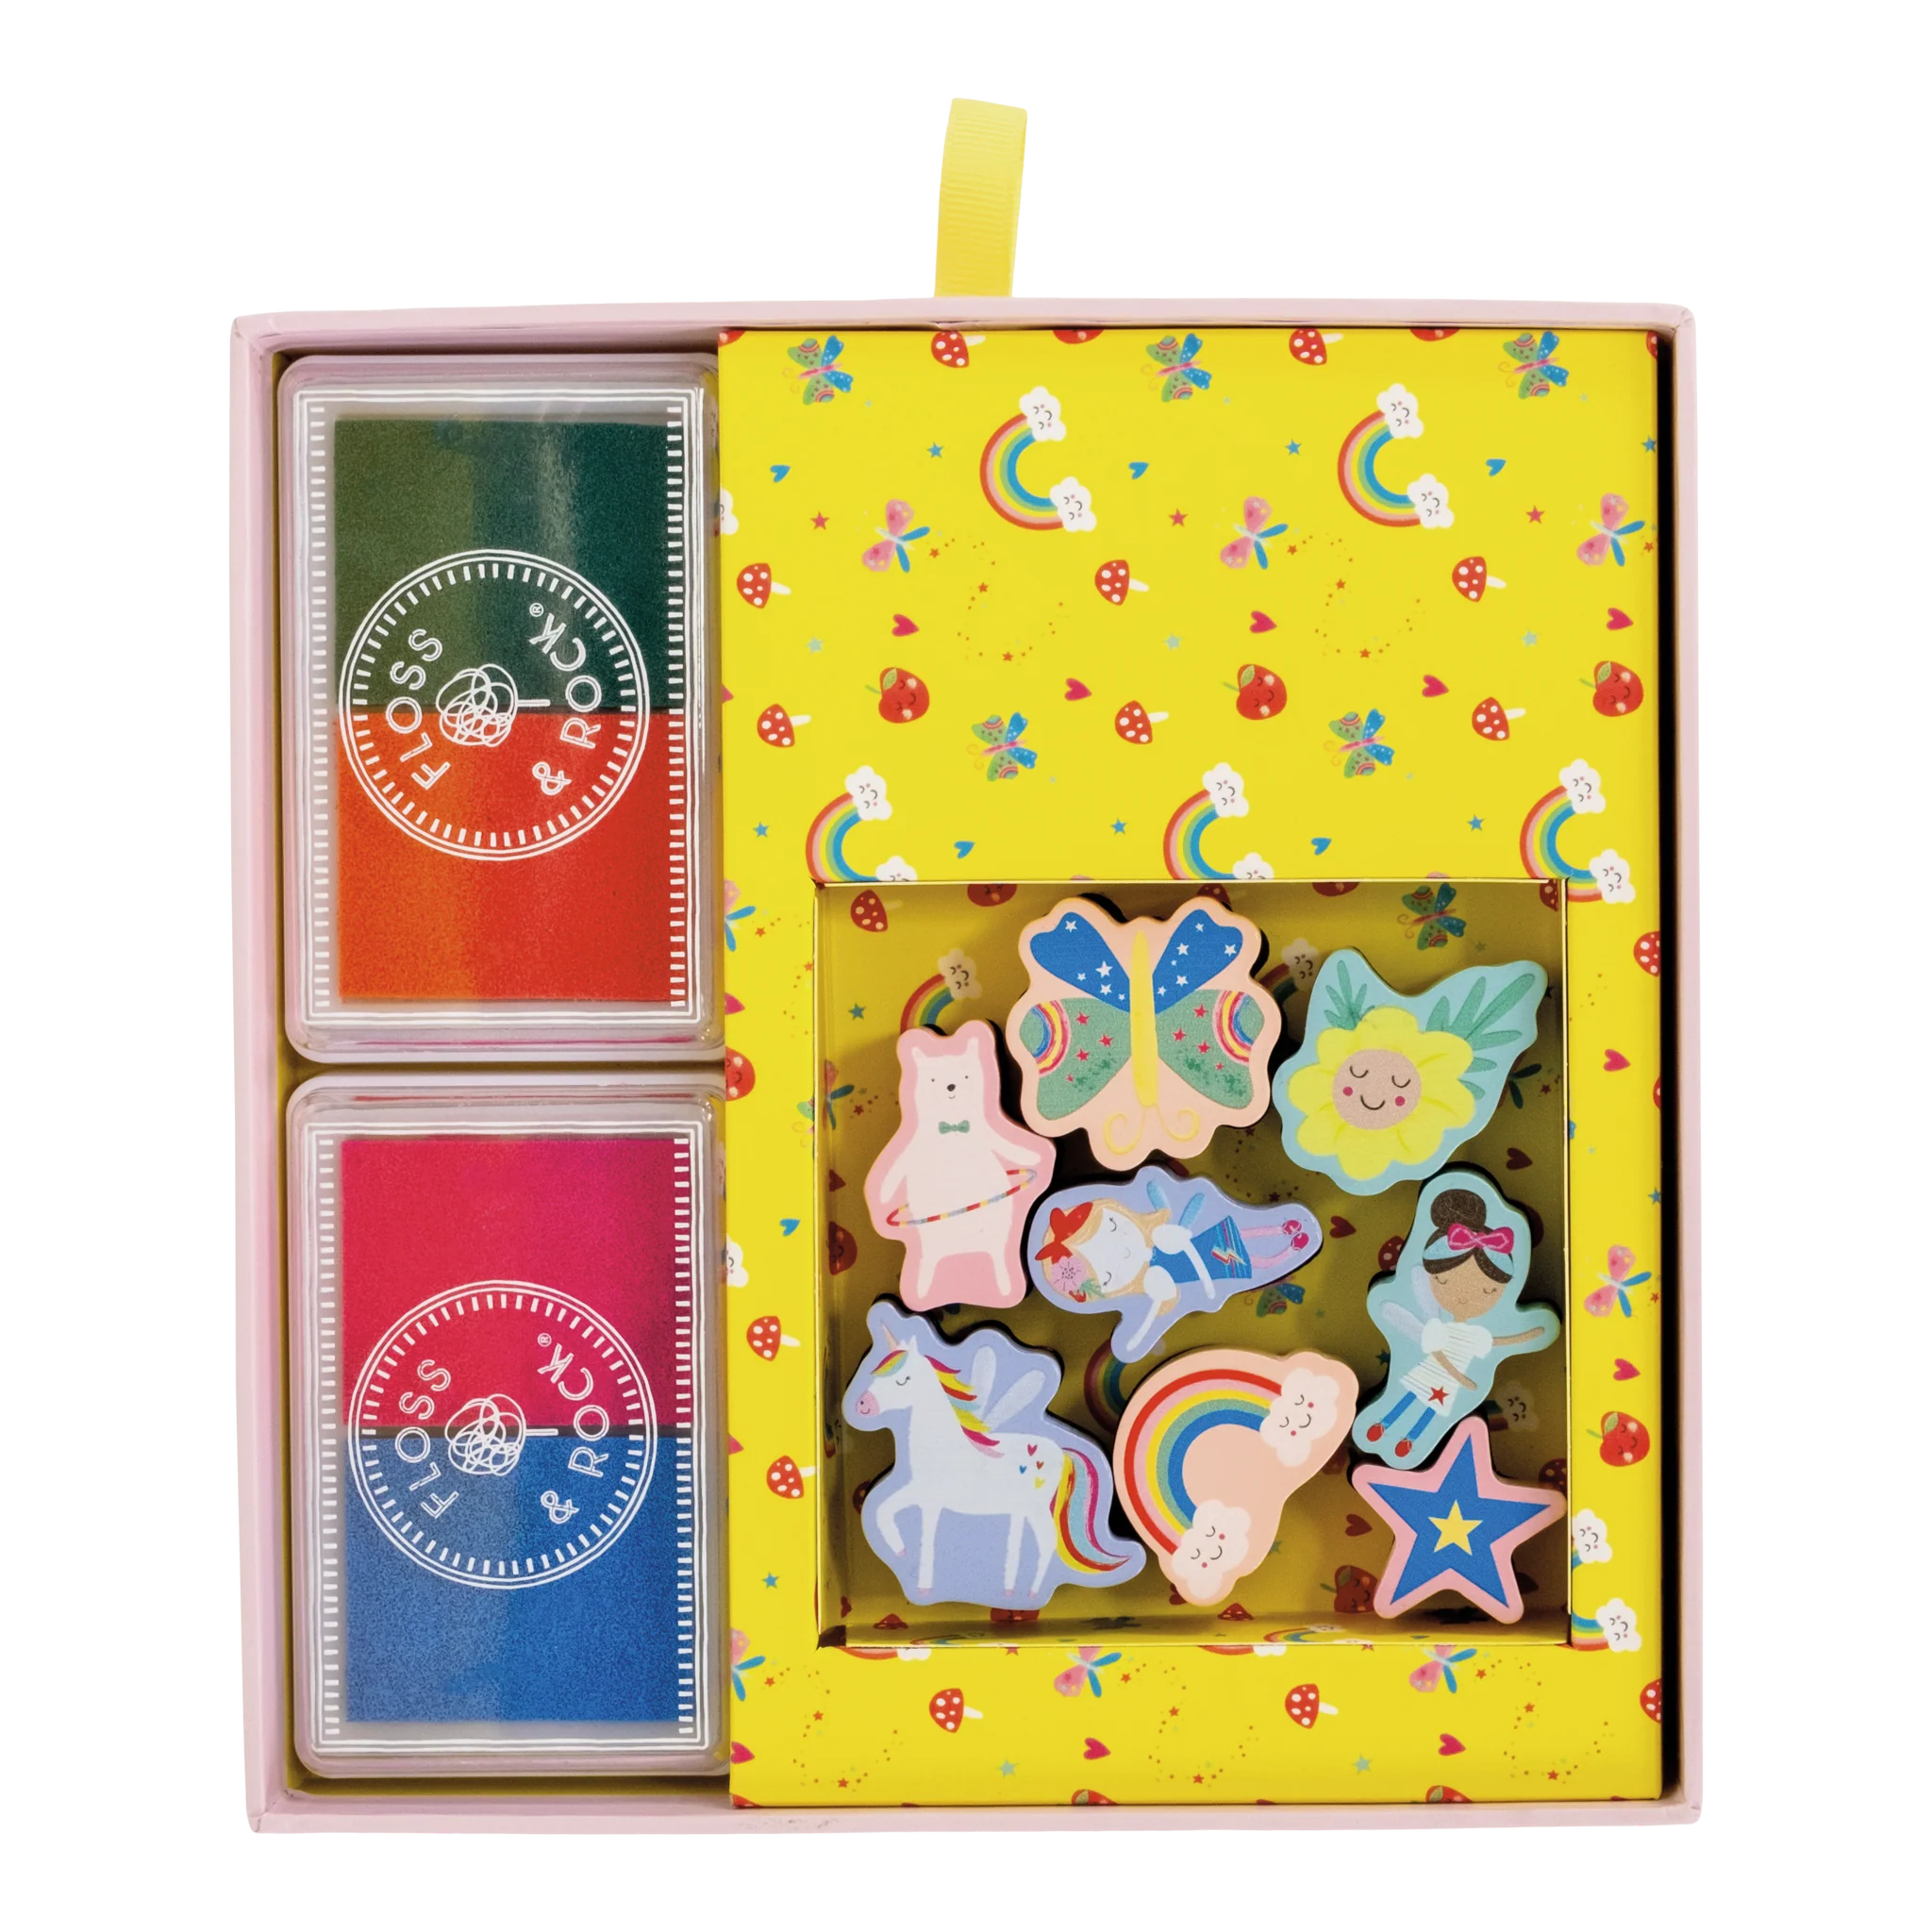 Floss & Rock My Stamp Set – Rainbow Fairy